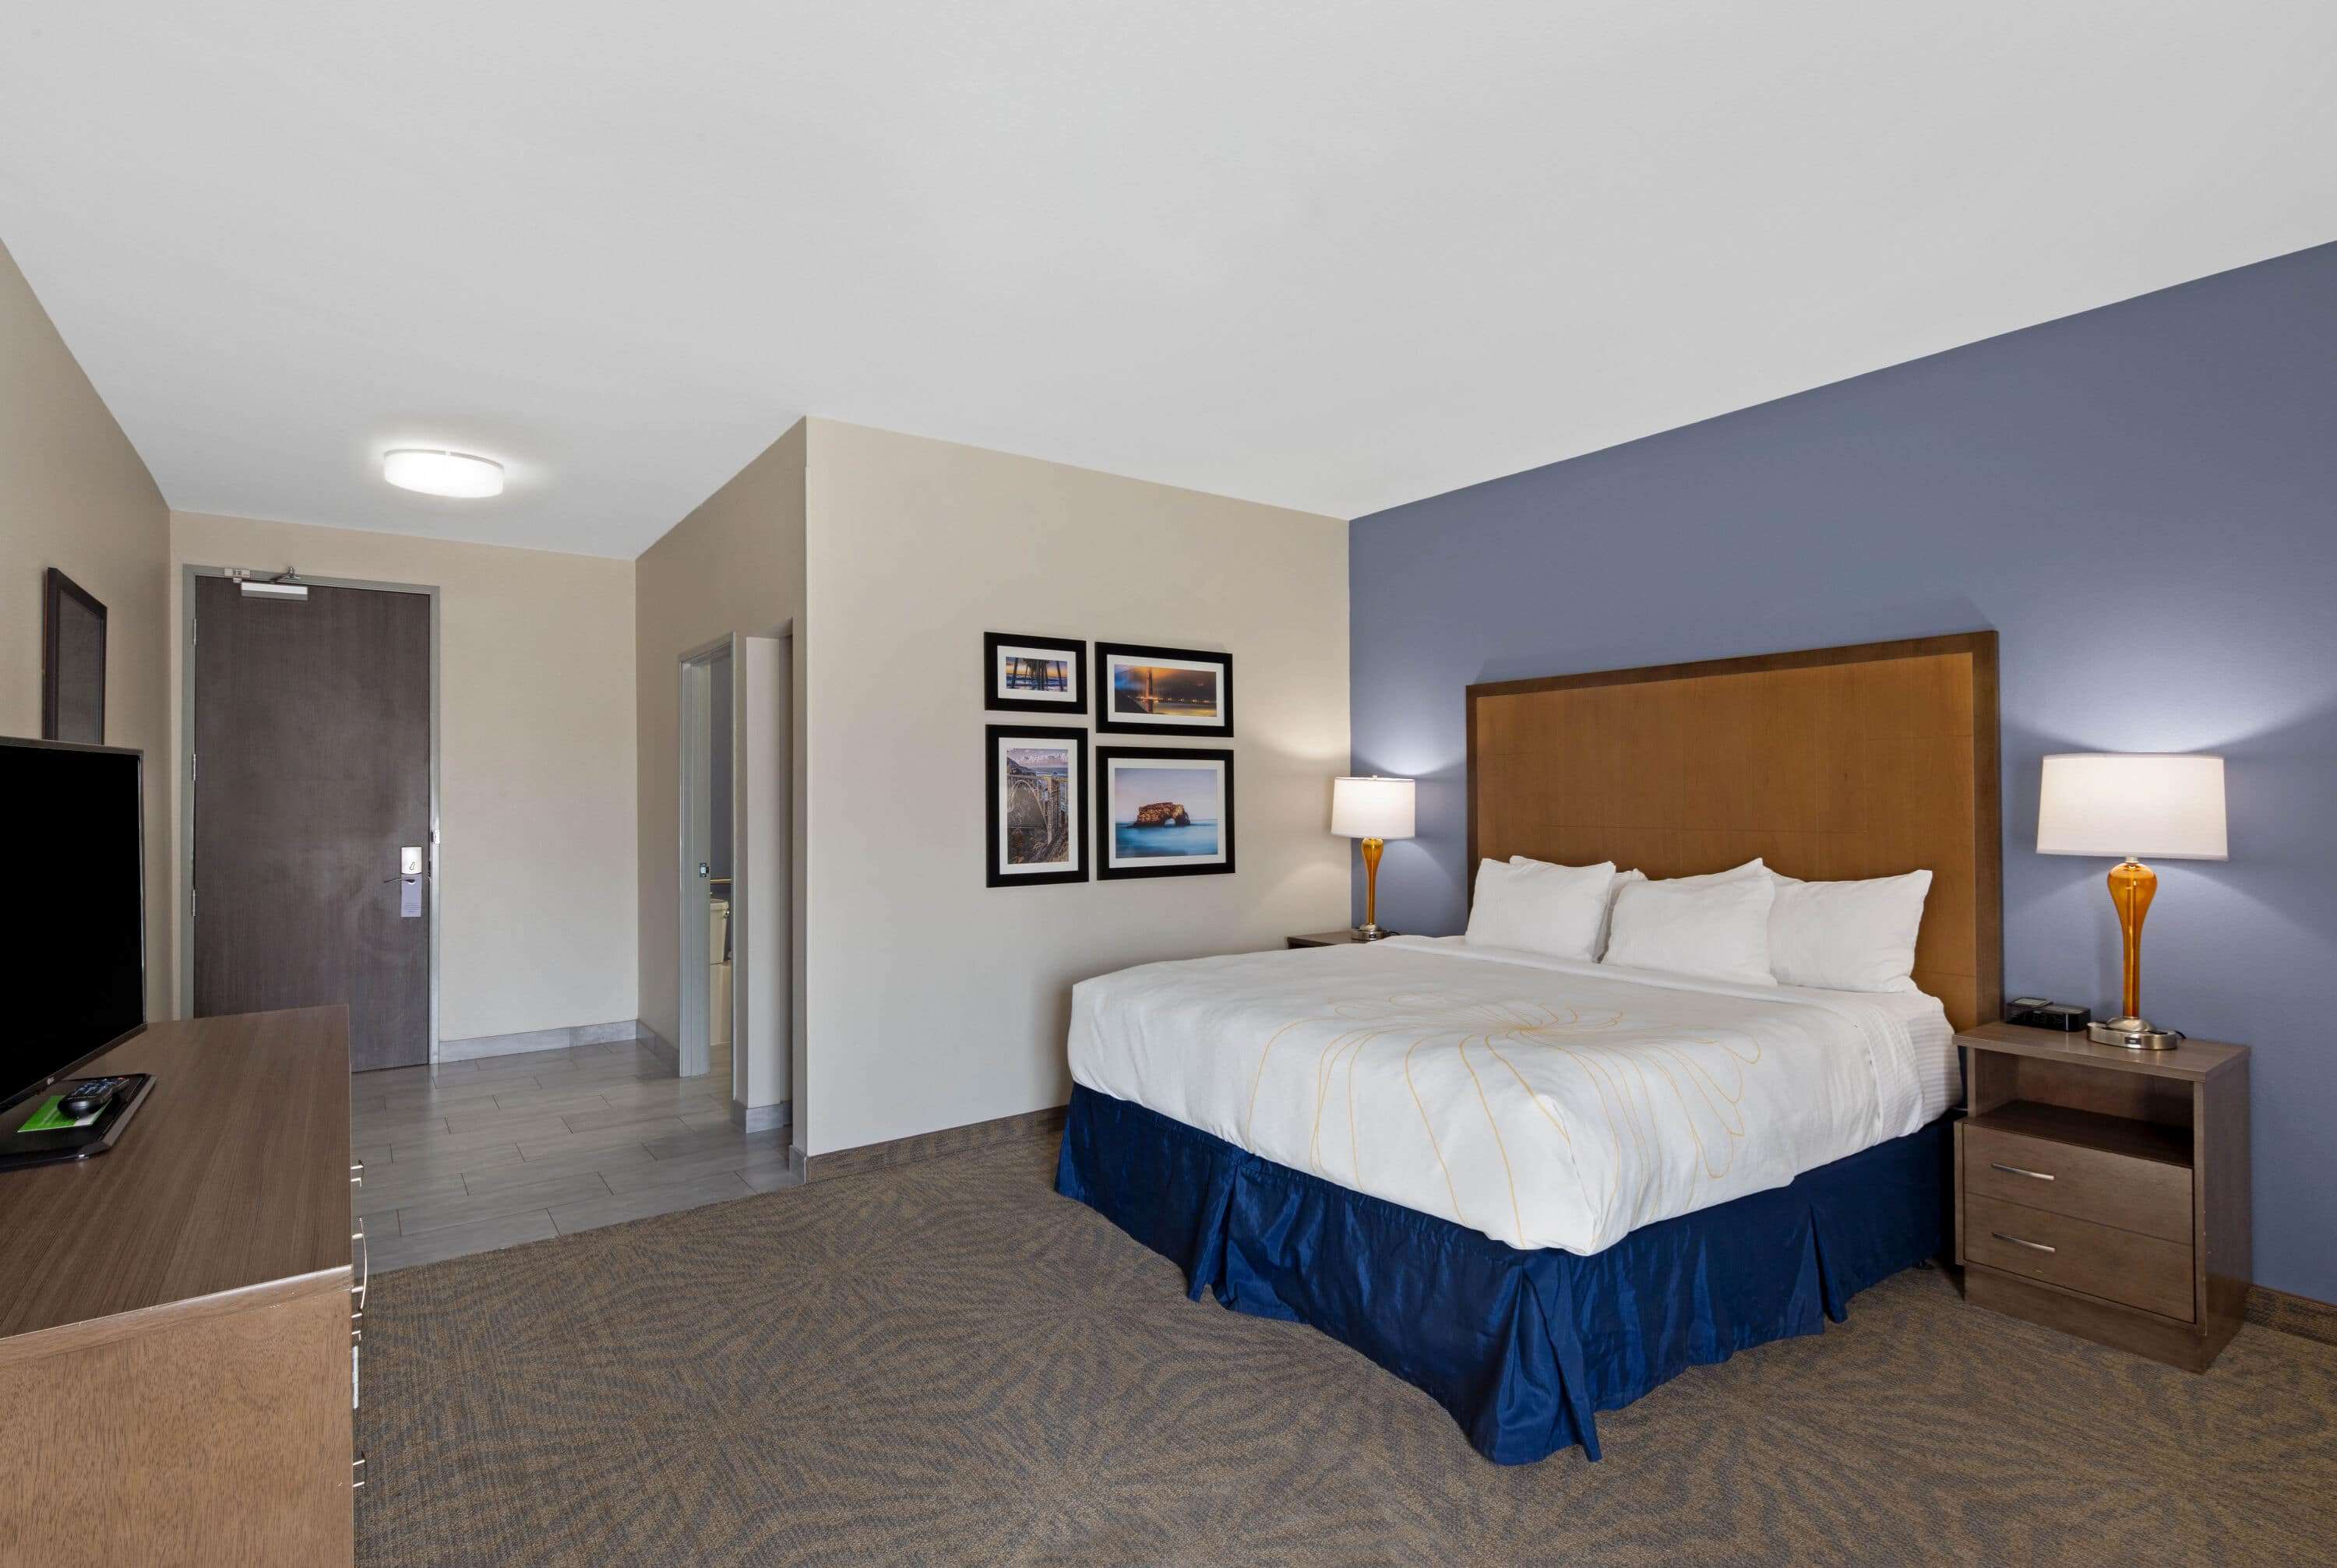 La Quinta Inn & Suites by Wyndham Morgan Hill-San Jose South